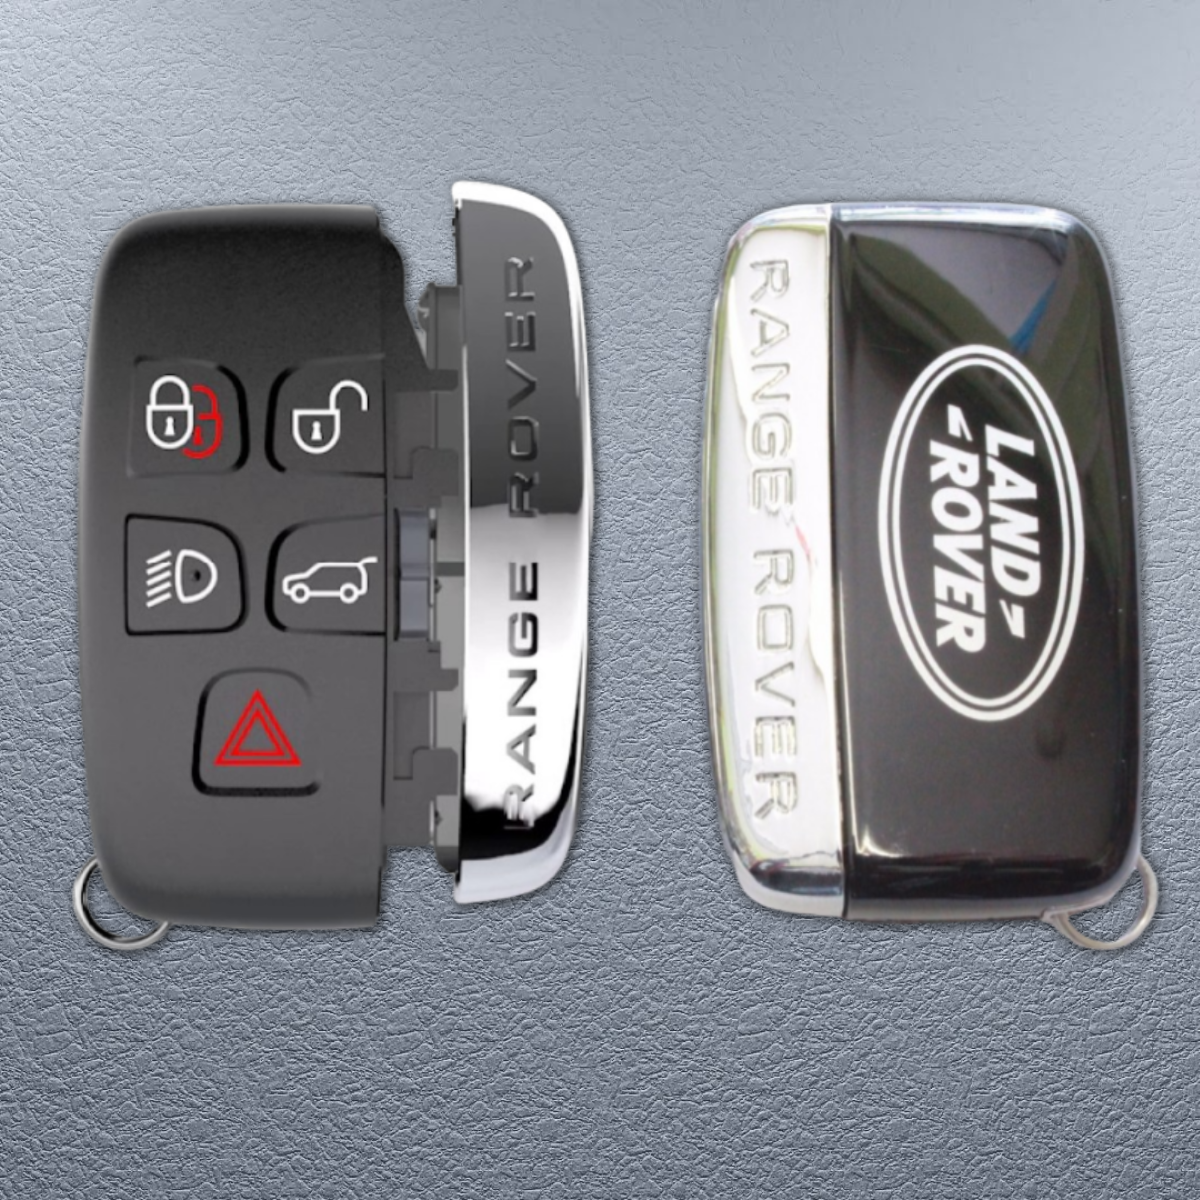 Корпус ключа зажигания автомобиля подходит для Range Rover / Land Rover Discovery 4 / Freelander 2 / Discovery Sport